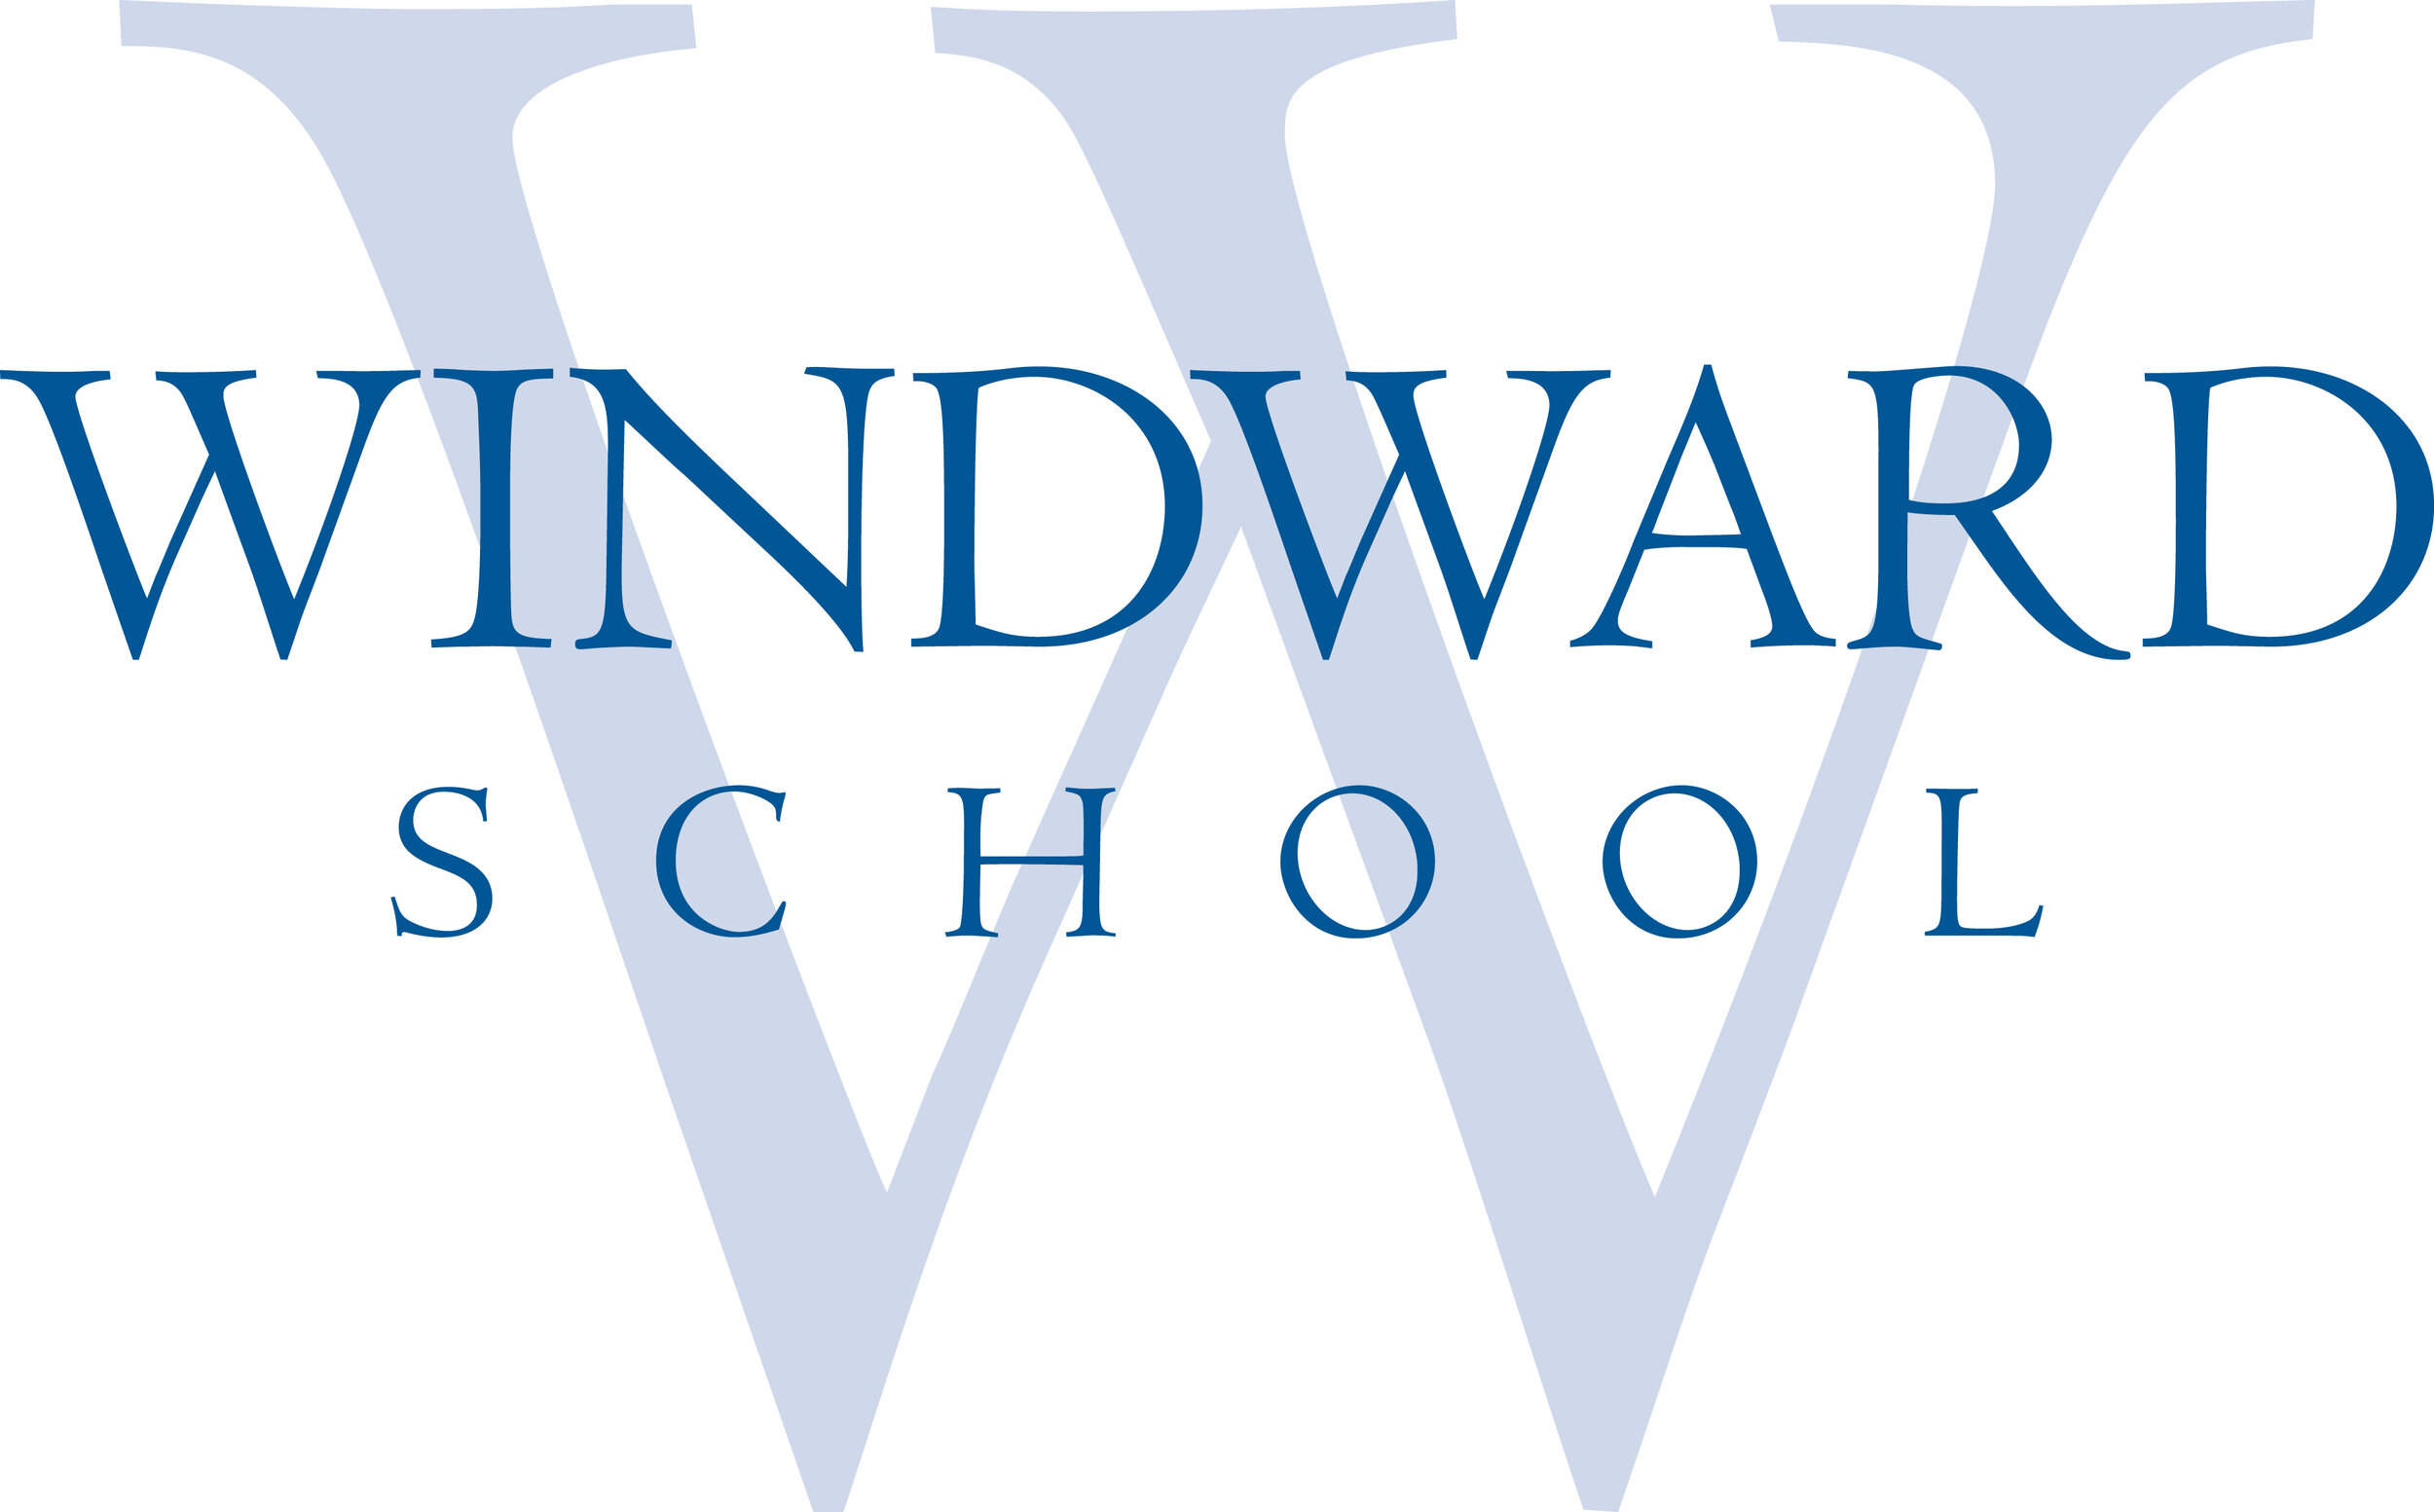 Windward_school logo.jpg